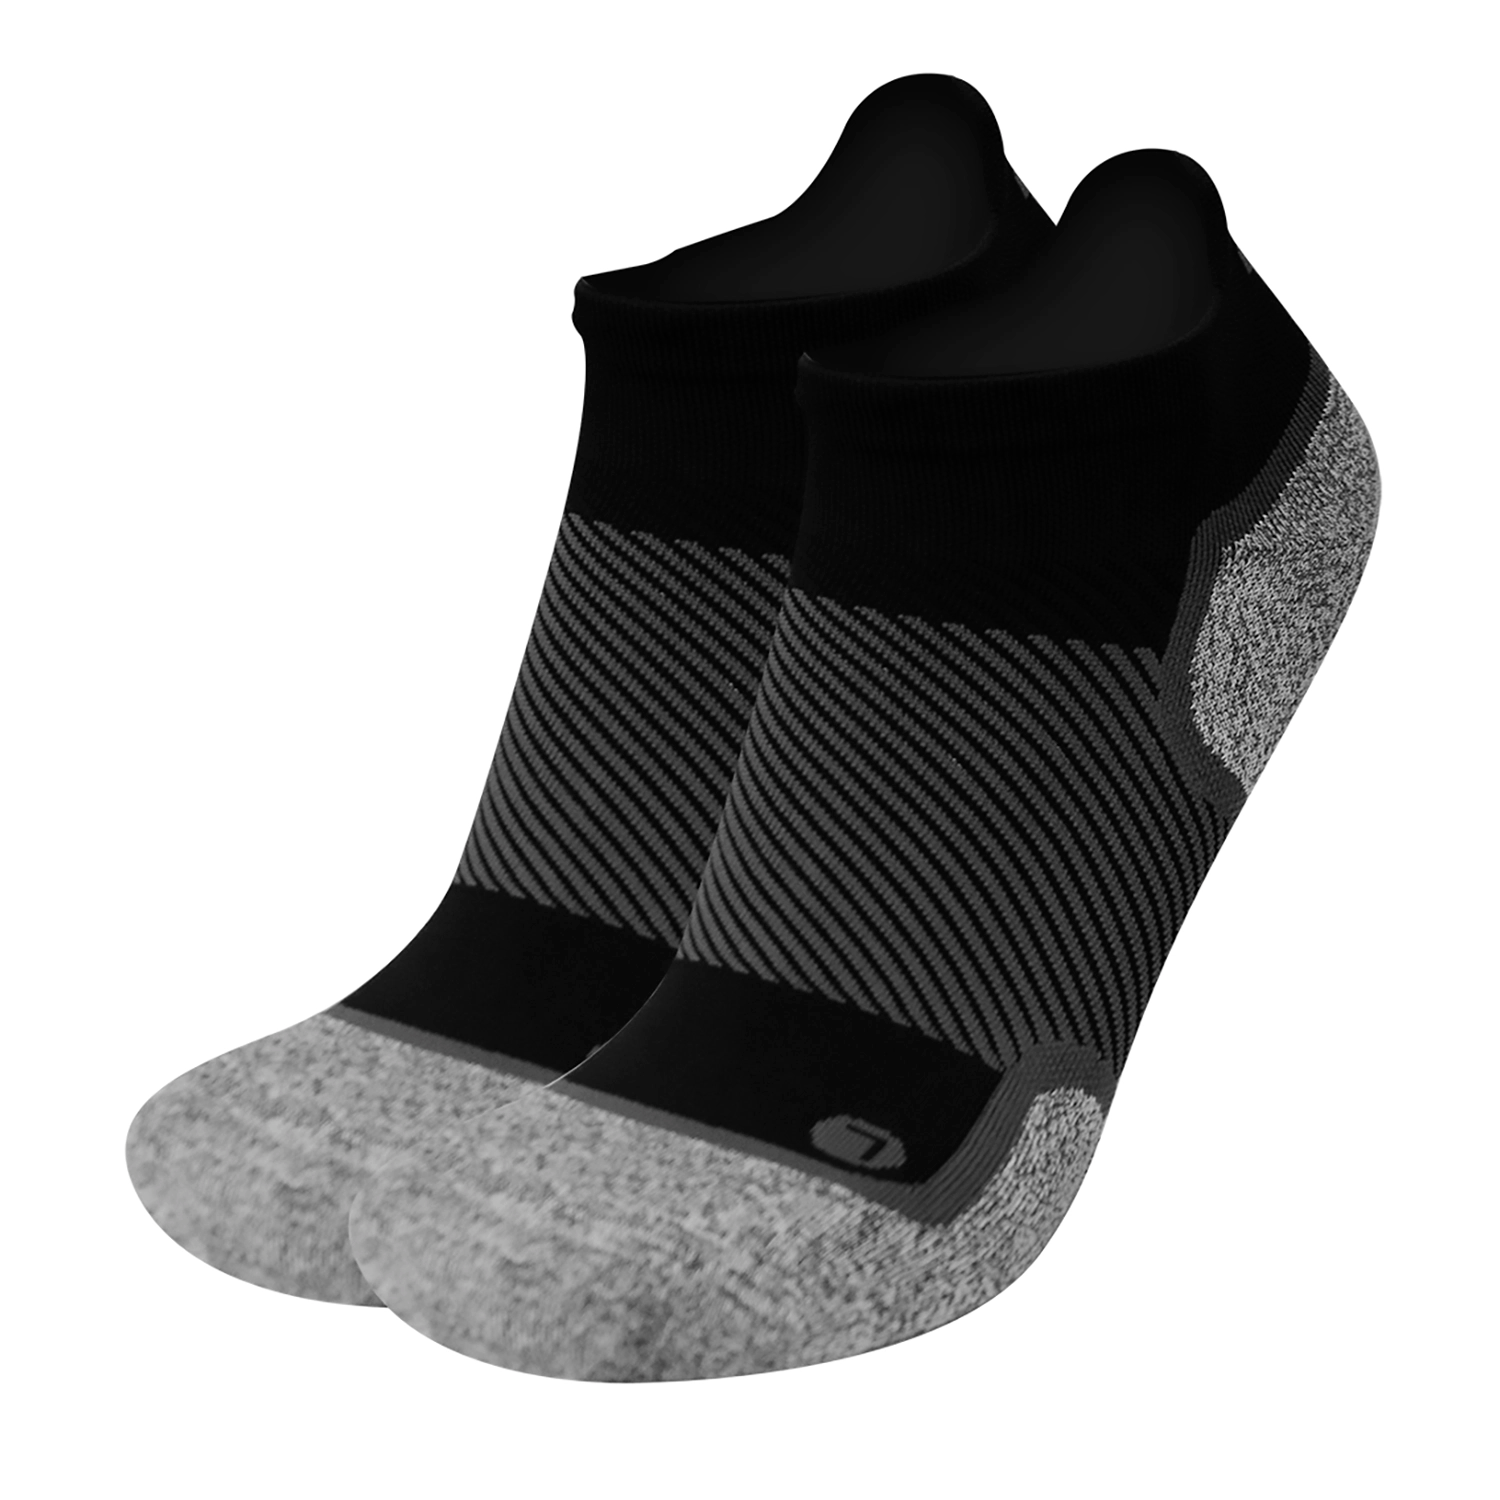 Orthosleeve Bunion Relief Socks - Black